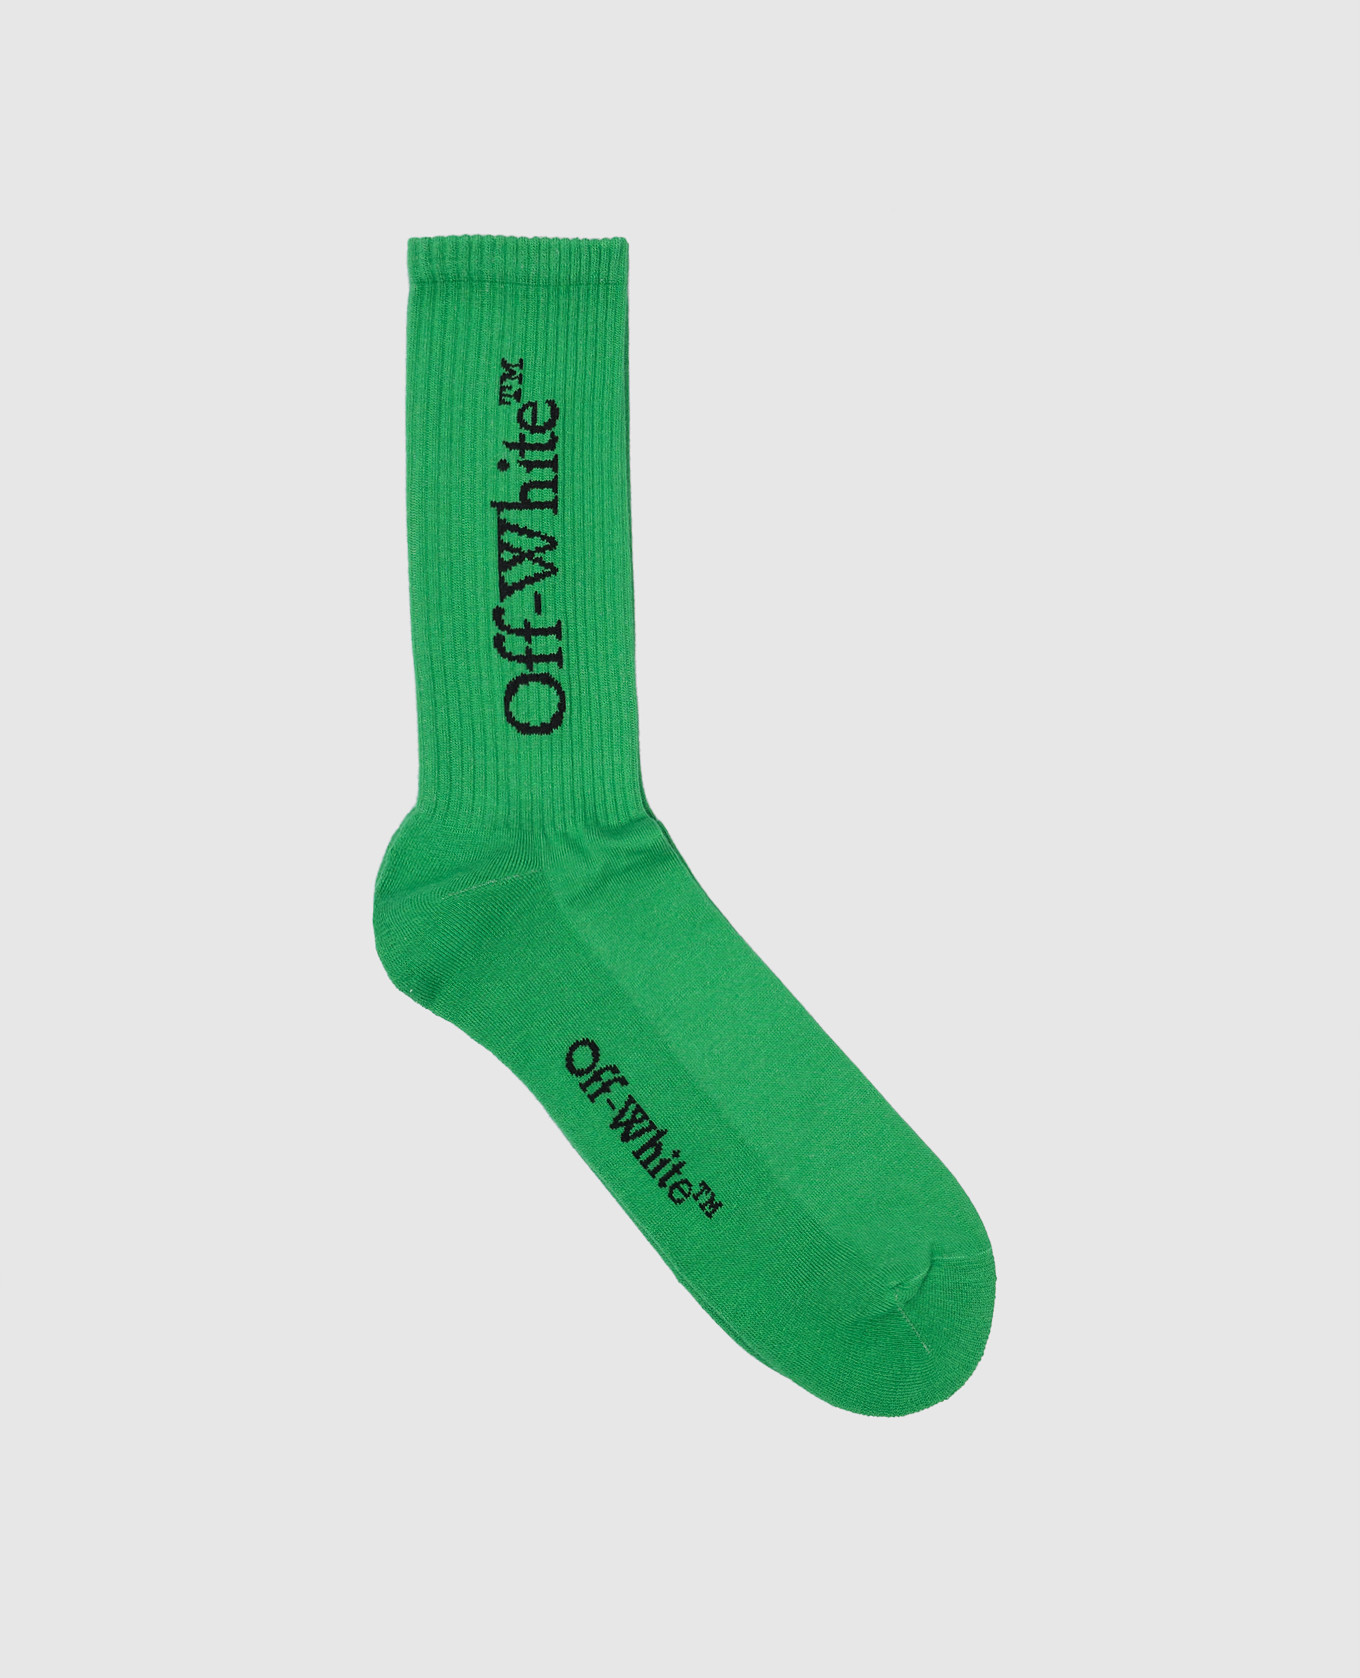 Green socks with logo pattern